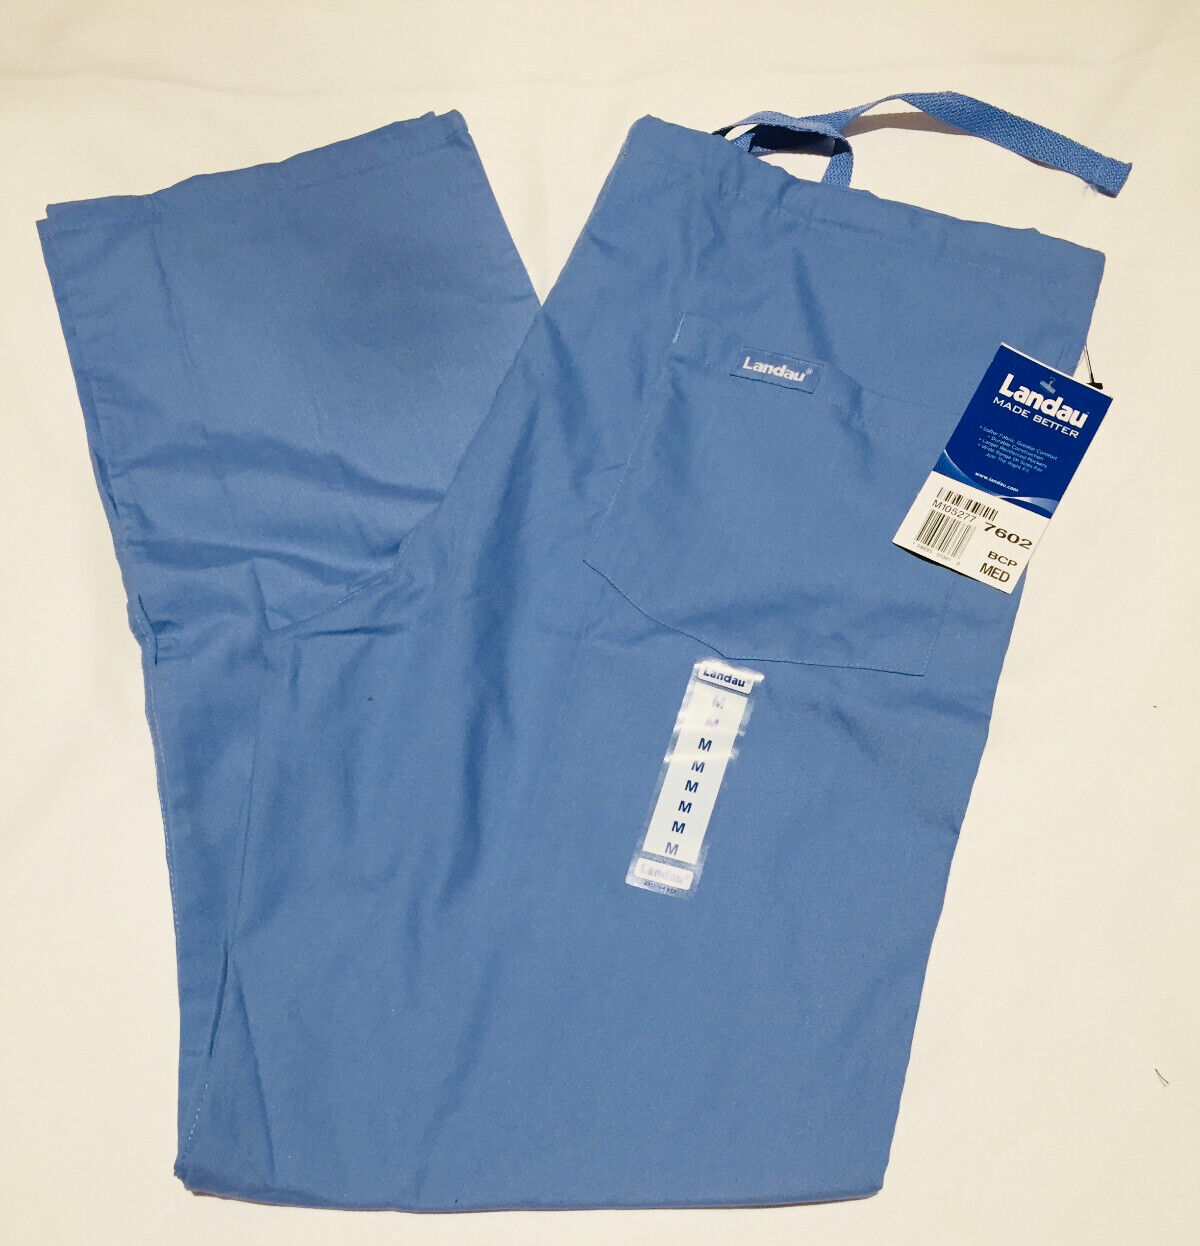 NEW Landau Women's Scrub Medical Pants Size M Blue Nursing 76oz Landau